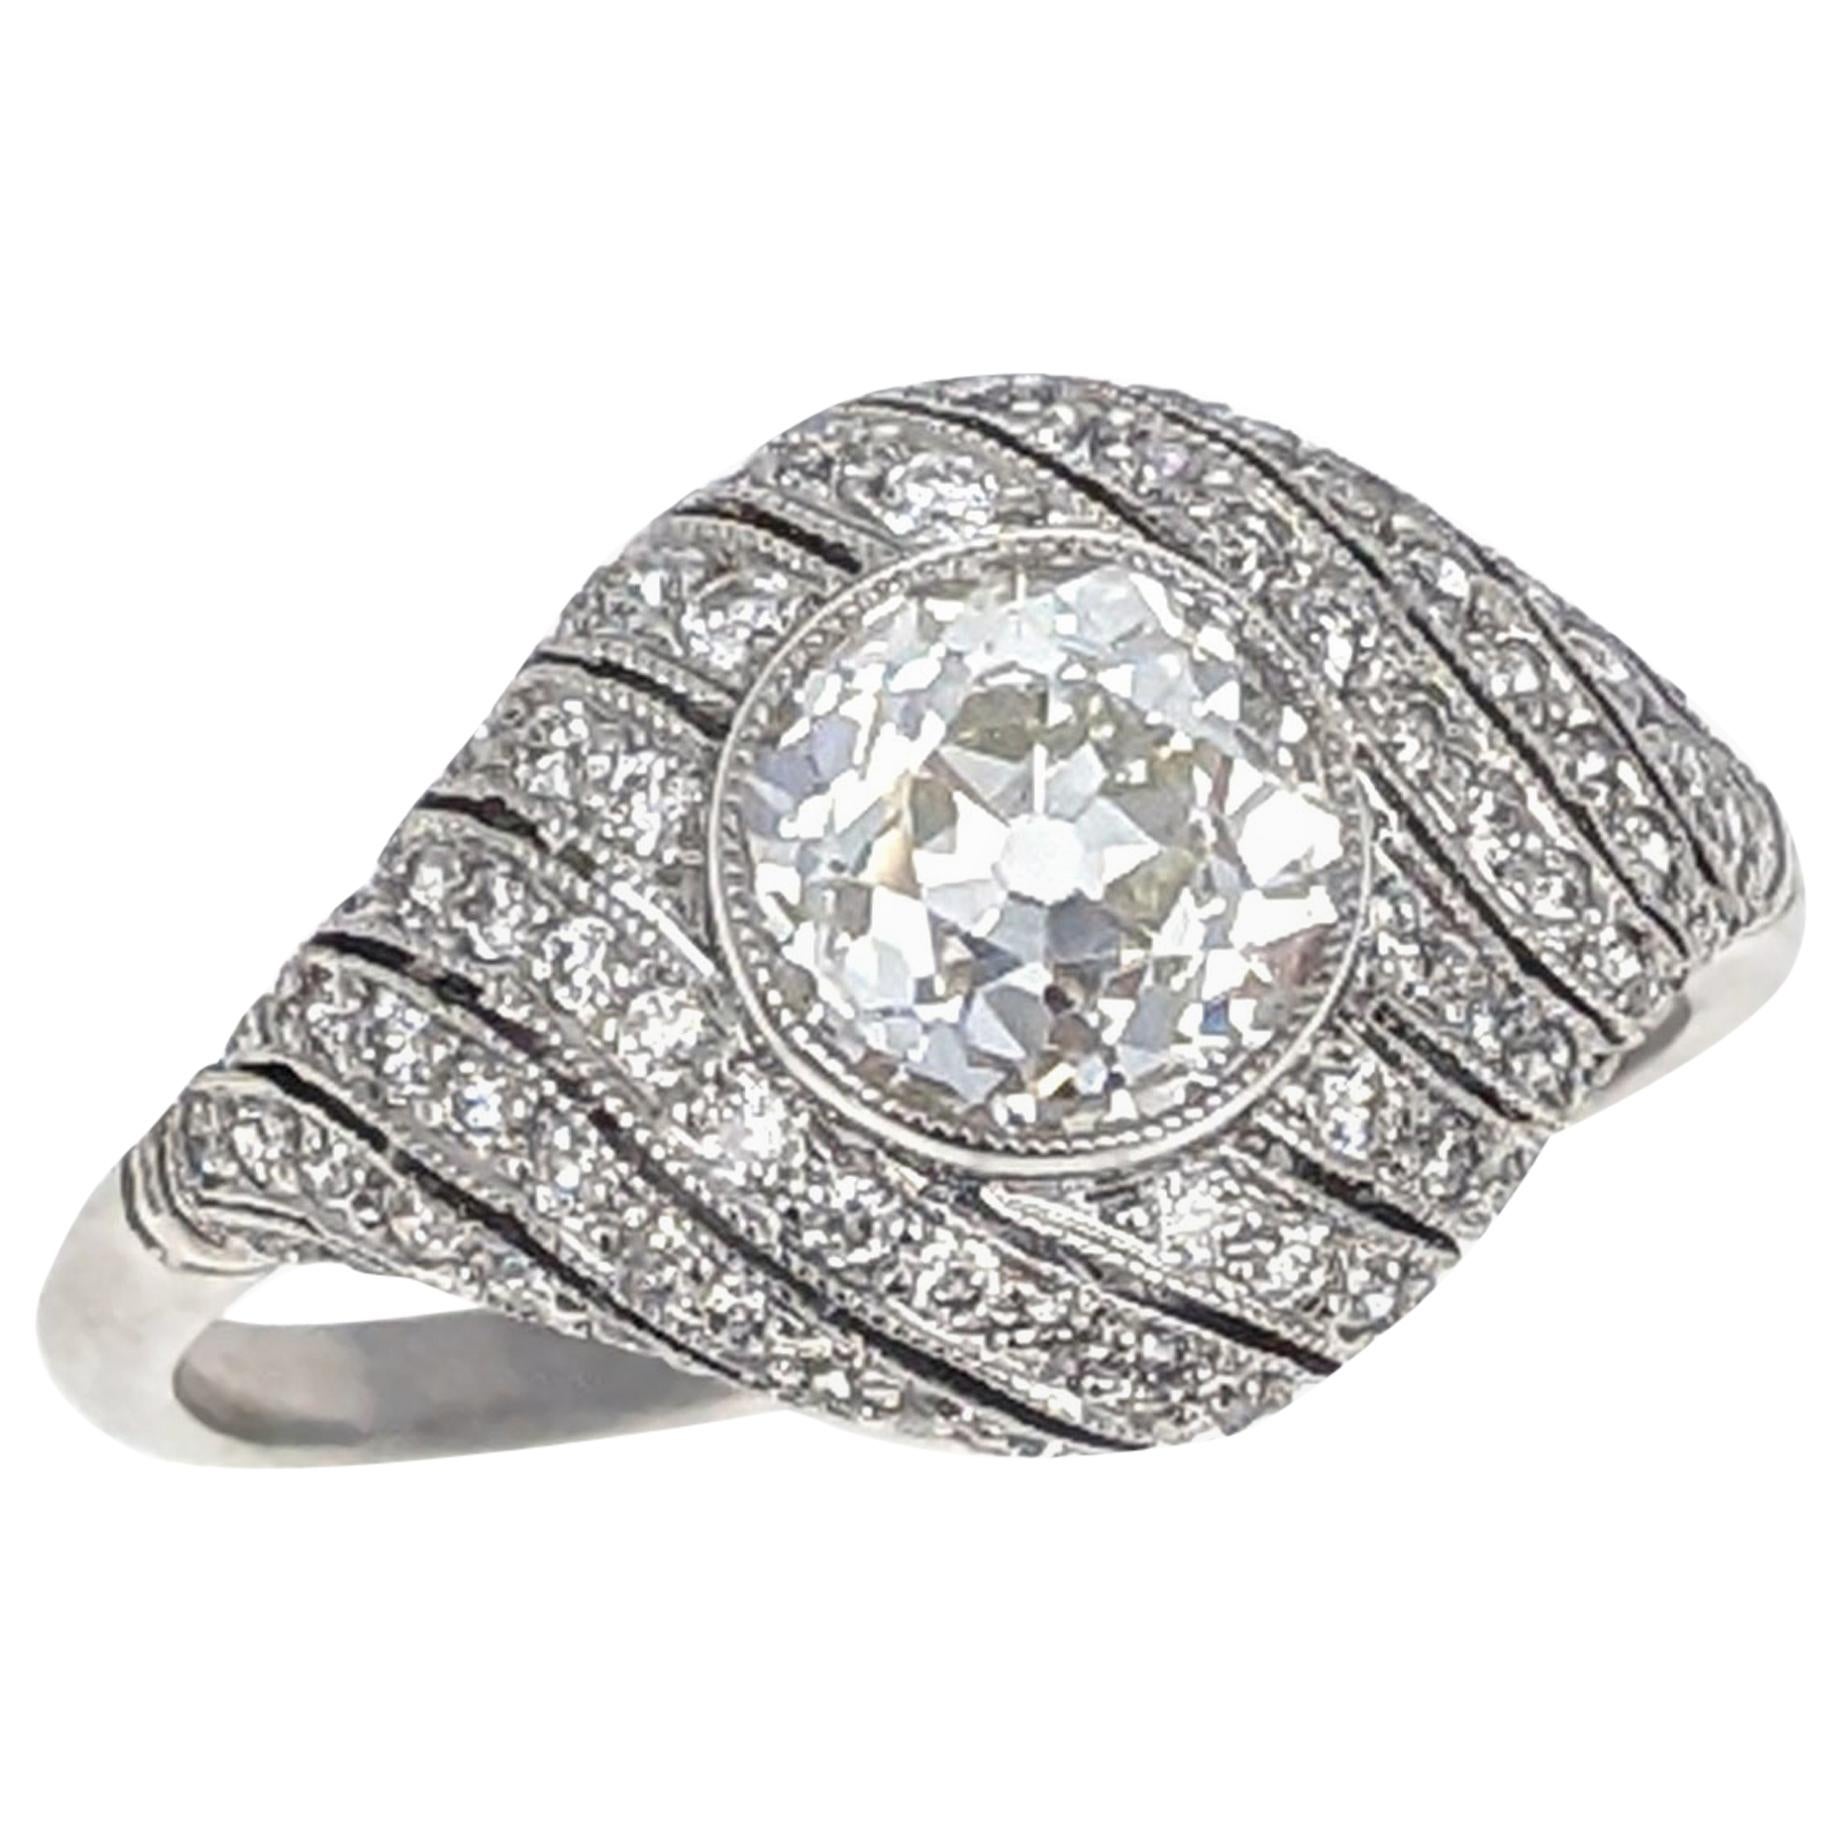 1.12 Carat Old European Cut Diamond Platinum Dome Engagement Ring